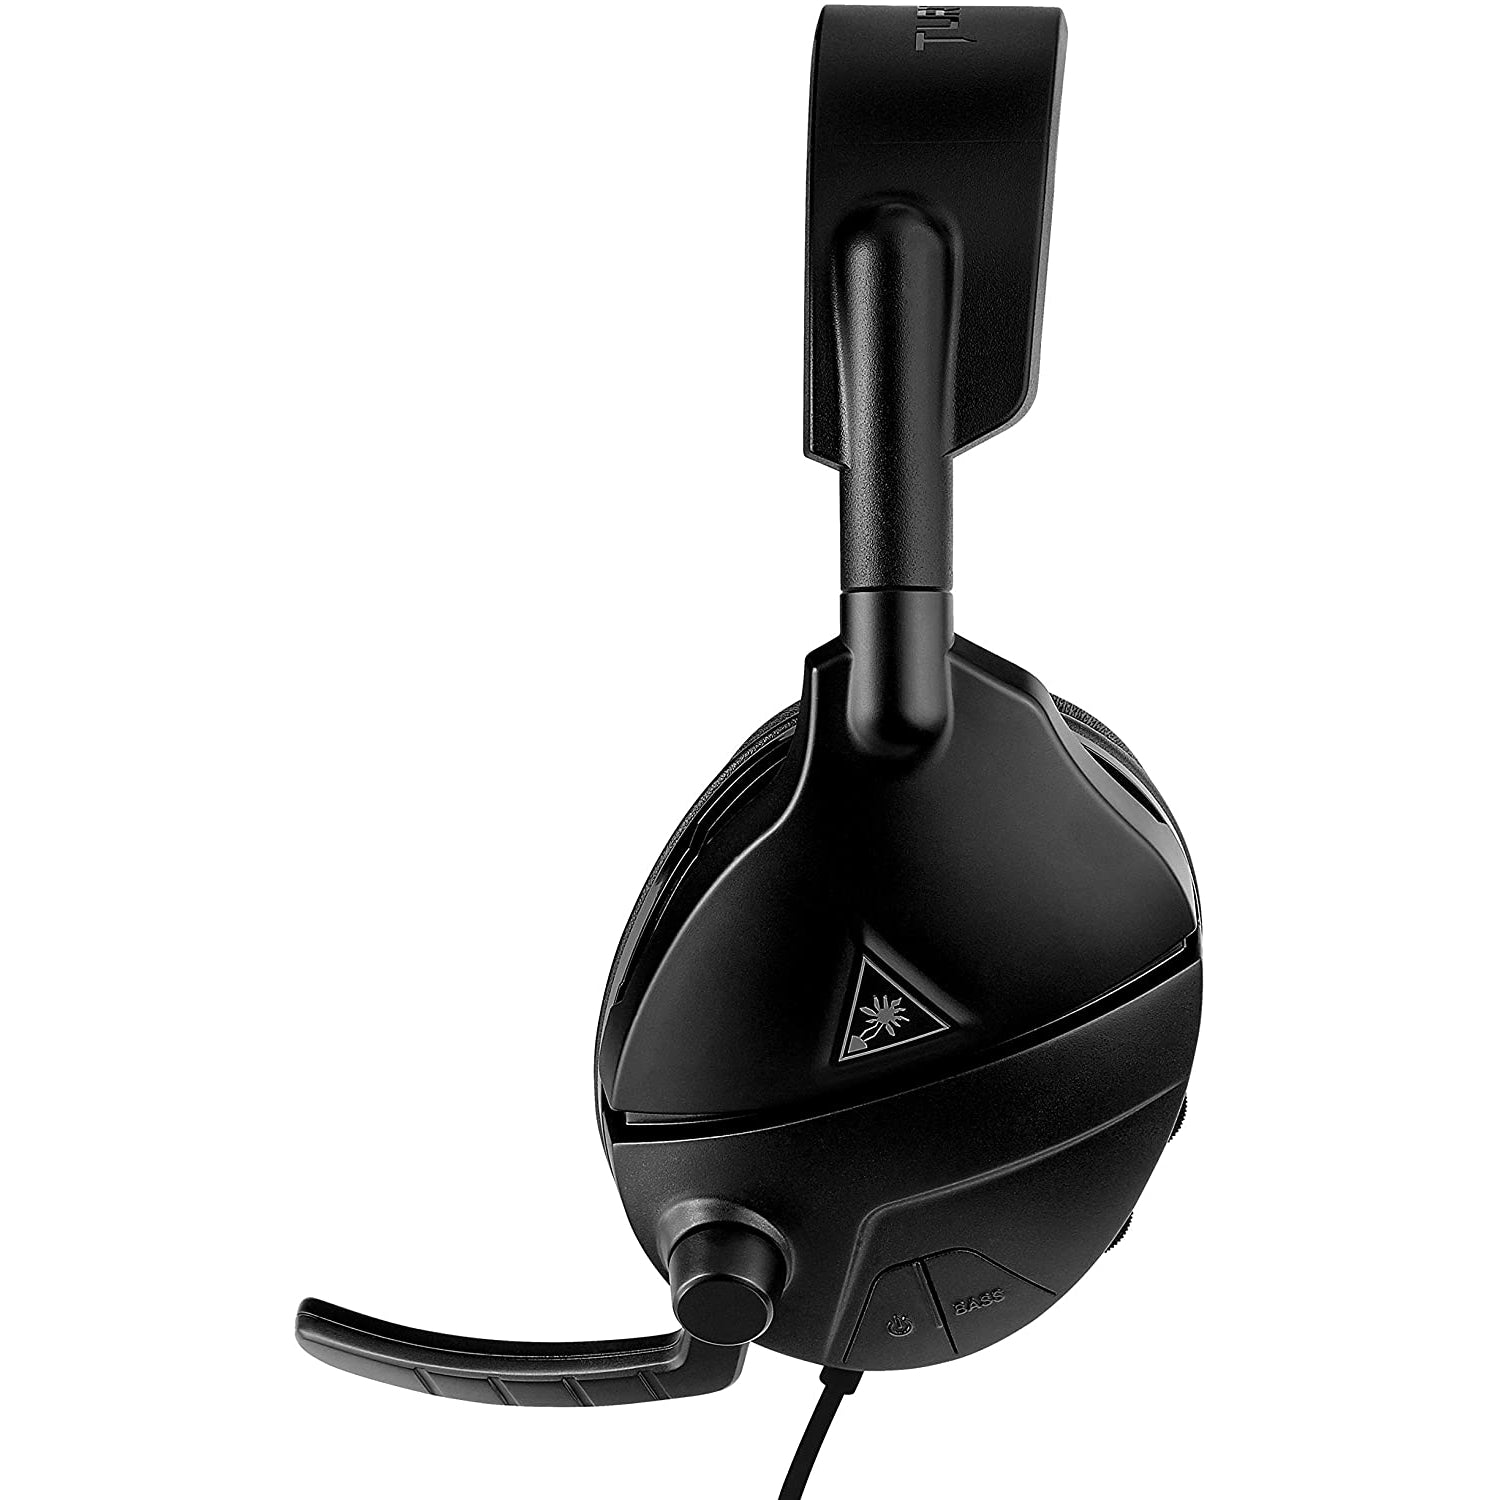 Turtle Beach Atlas Three Amplified Gaming Headset - Black - Refurbished Excellent